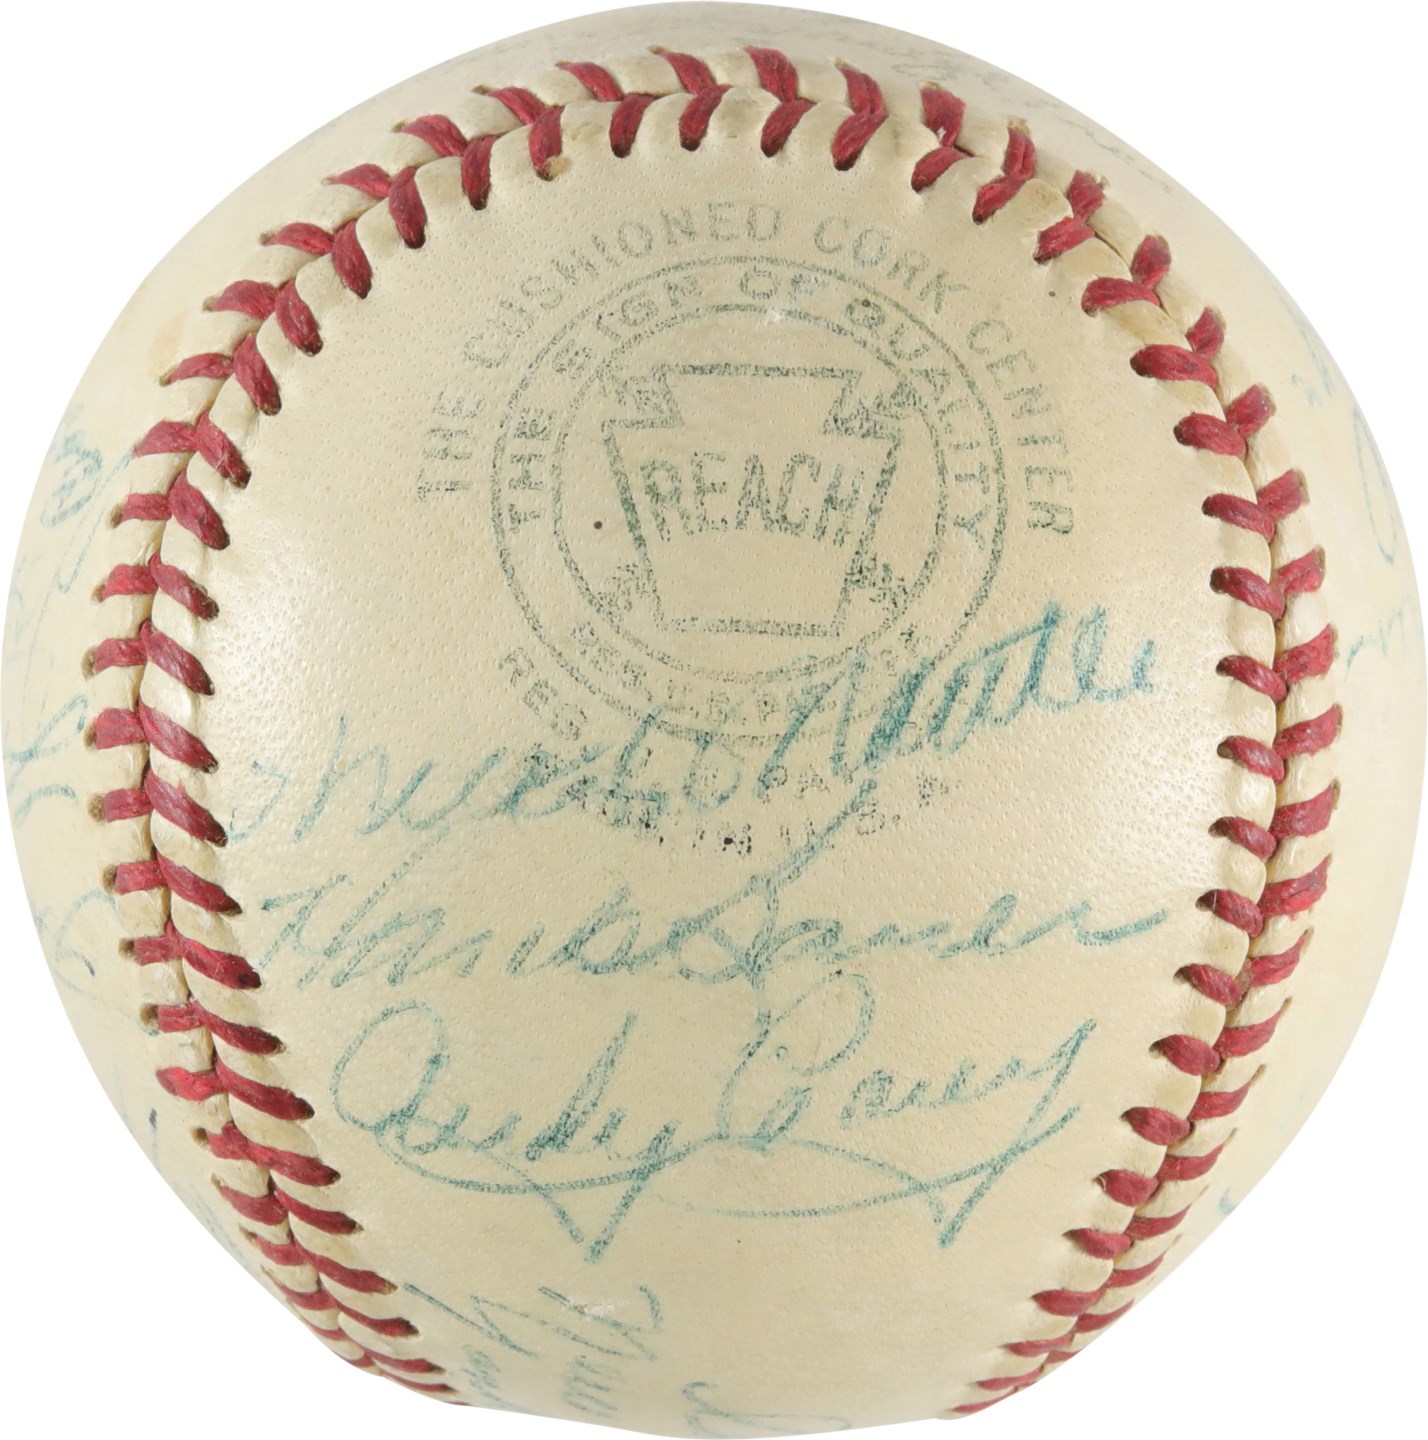 - 1955 American League Champion New York Yankees Team-Signed Baseball (PSA)